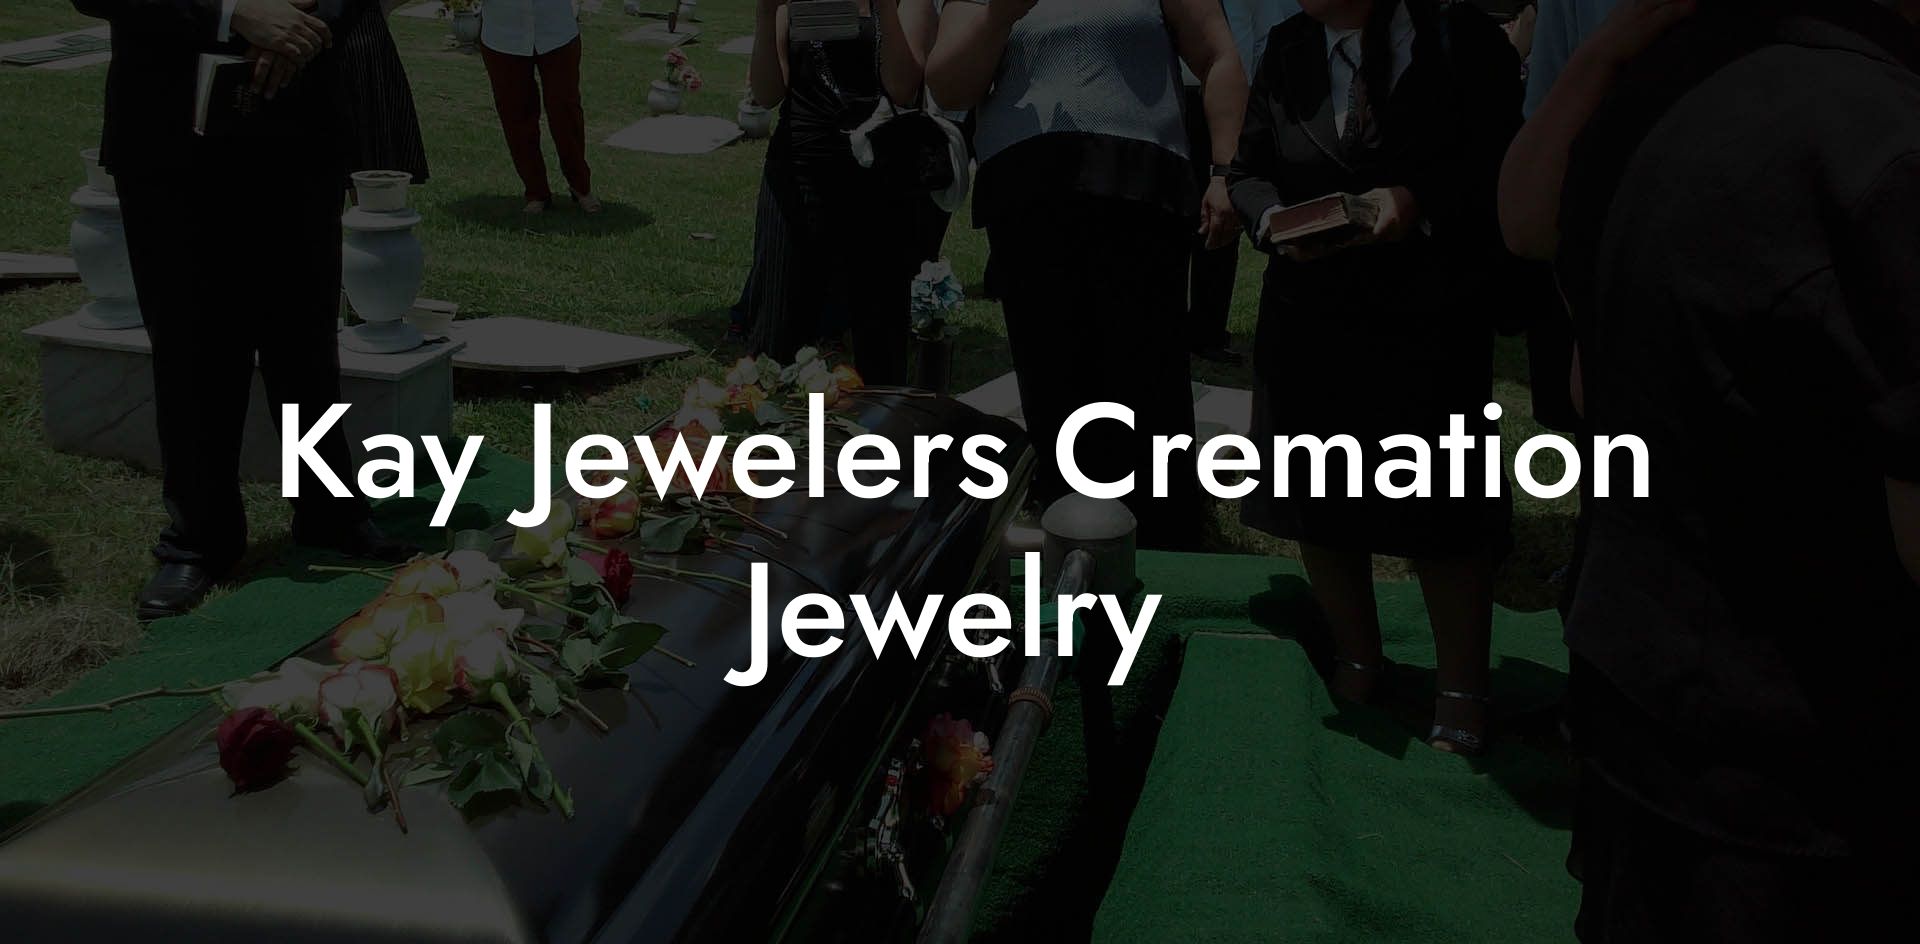 Kay Jewelers Cremation Jewelry